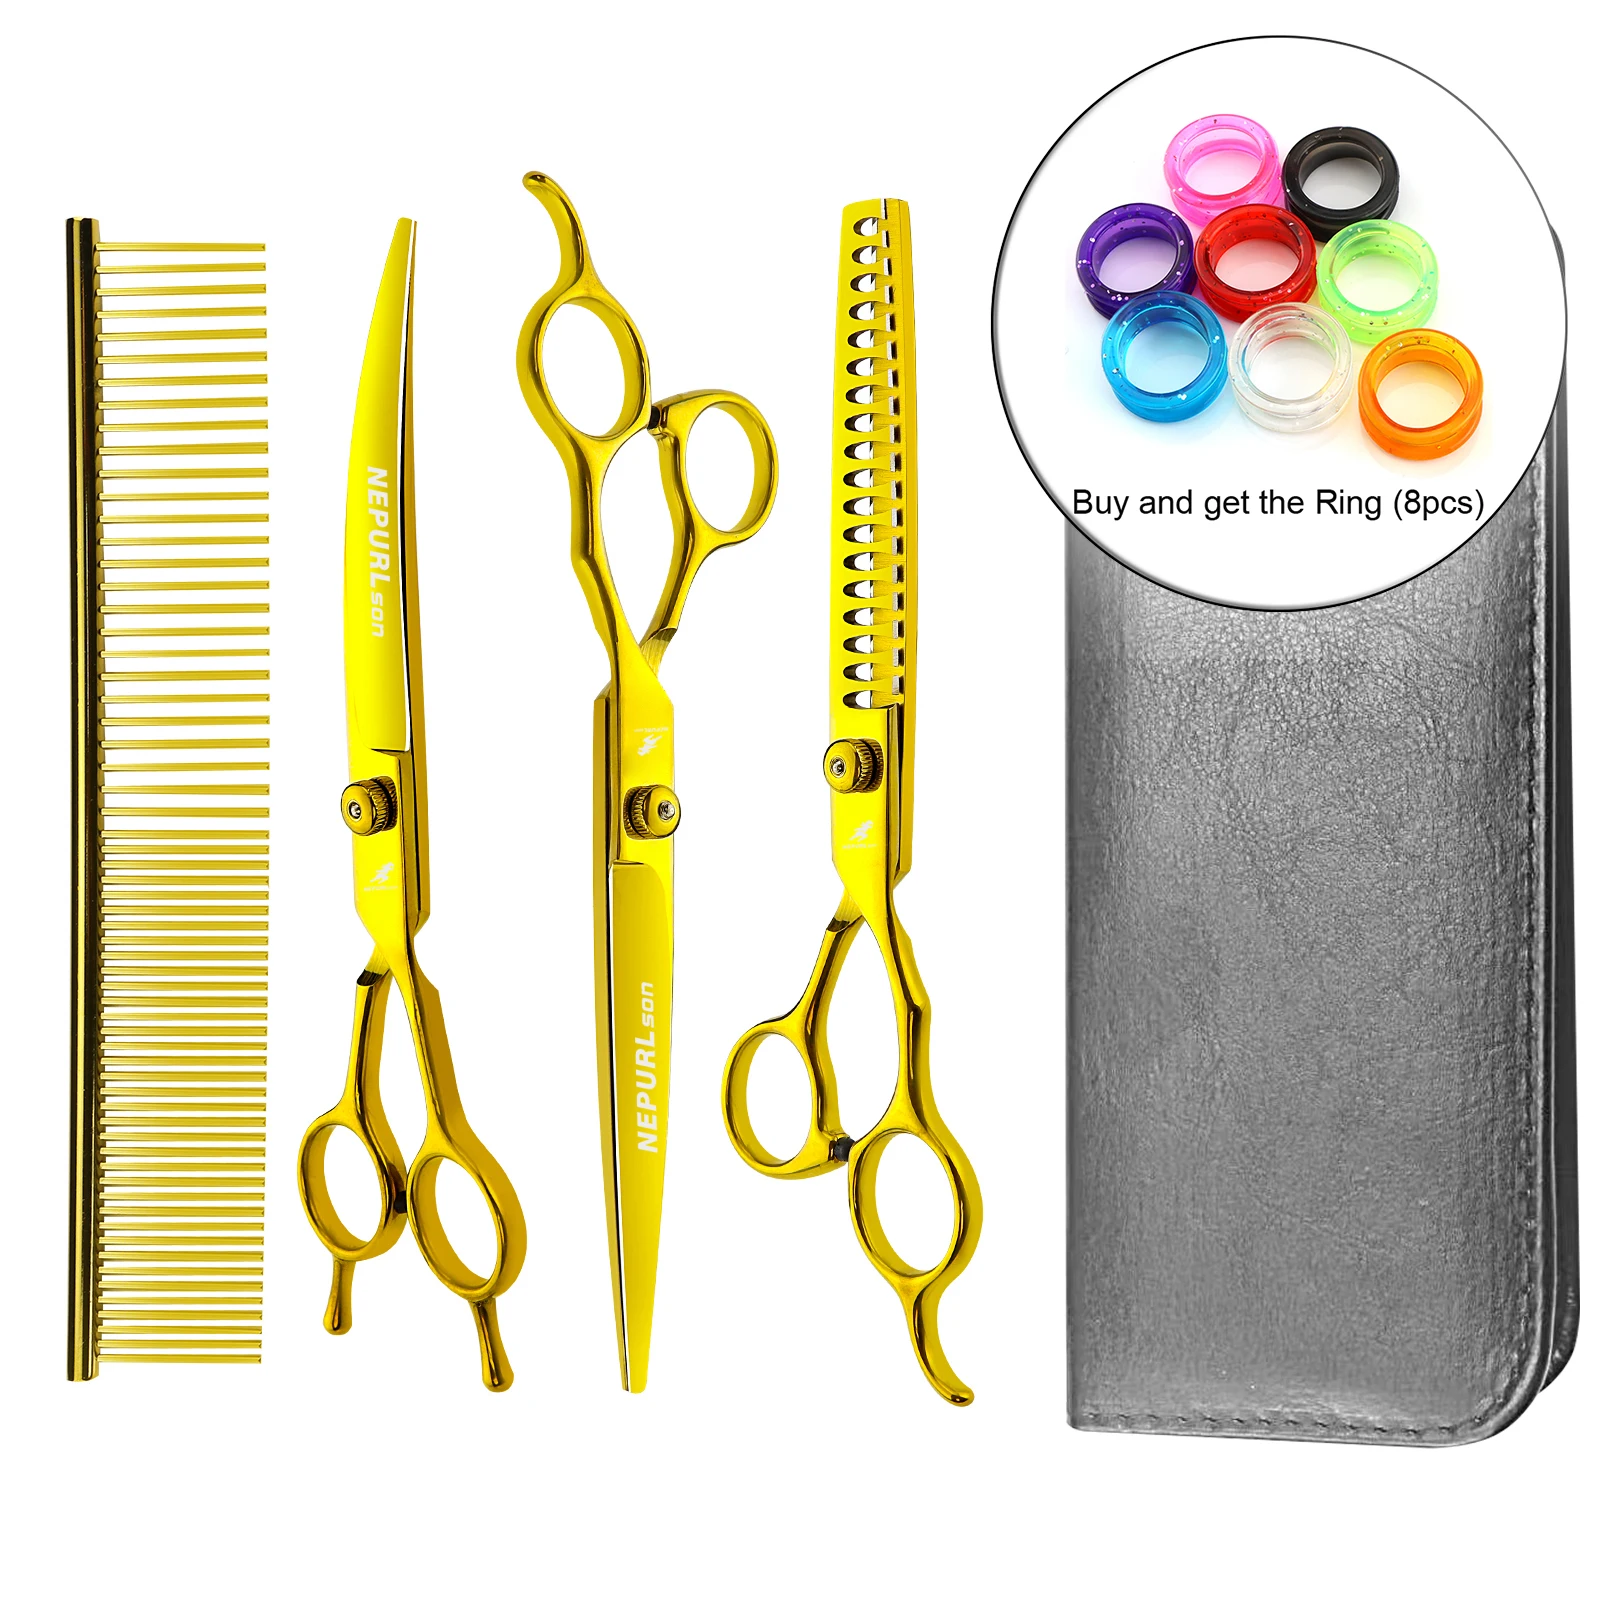 70-dog-pet-grooming-scissors-curved-scissors-cutting-scissors-packing-scissors-3-sets-of-scissors